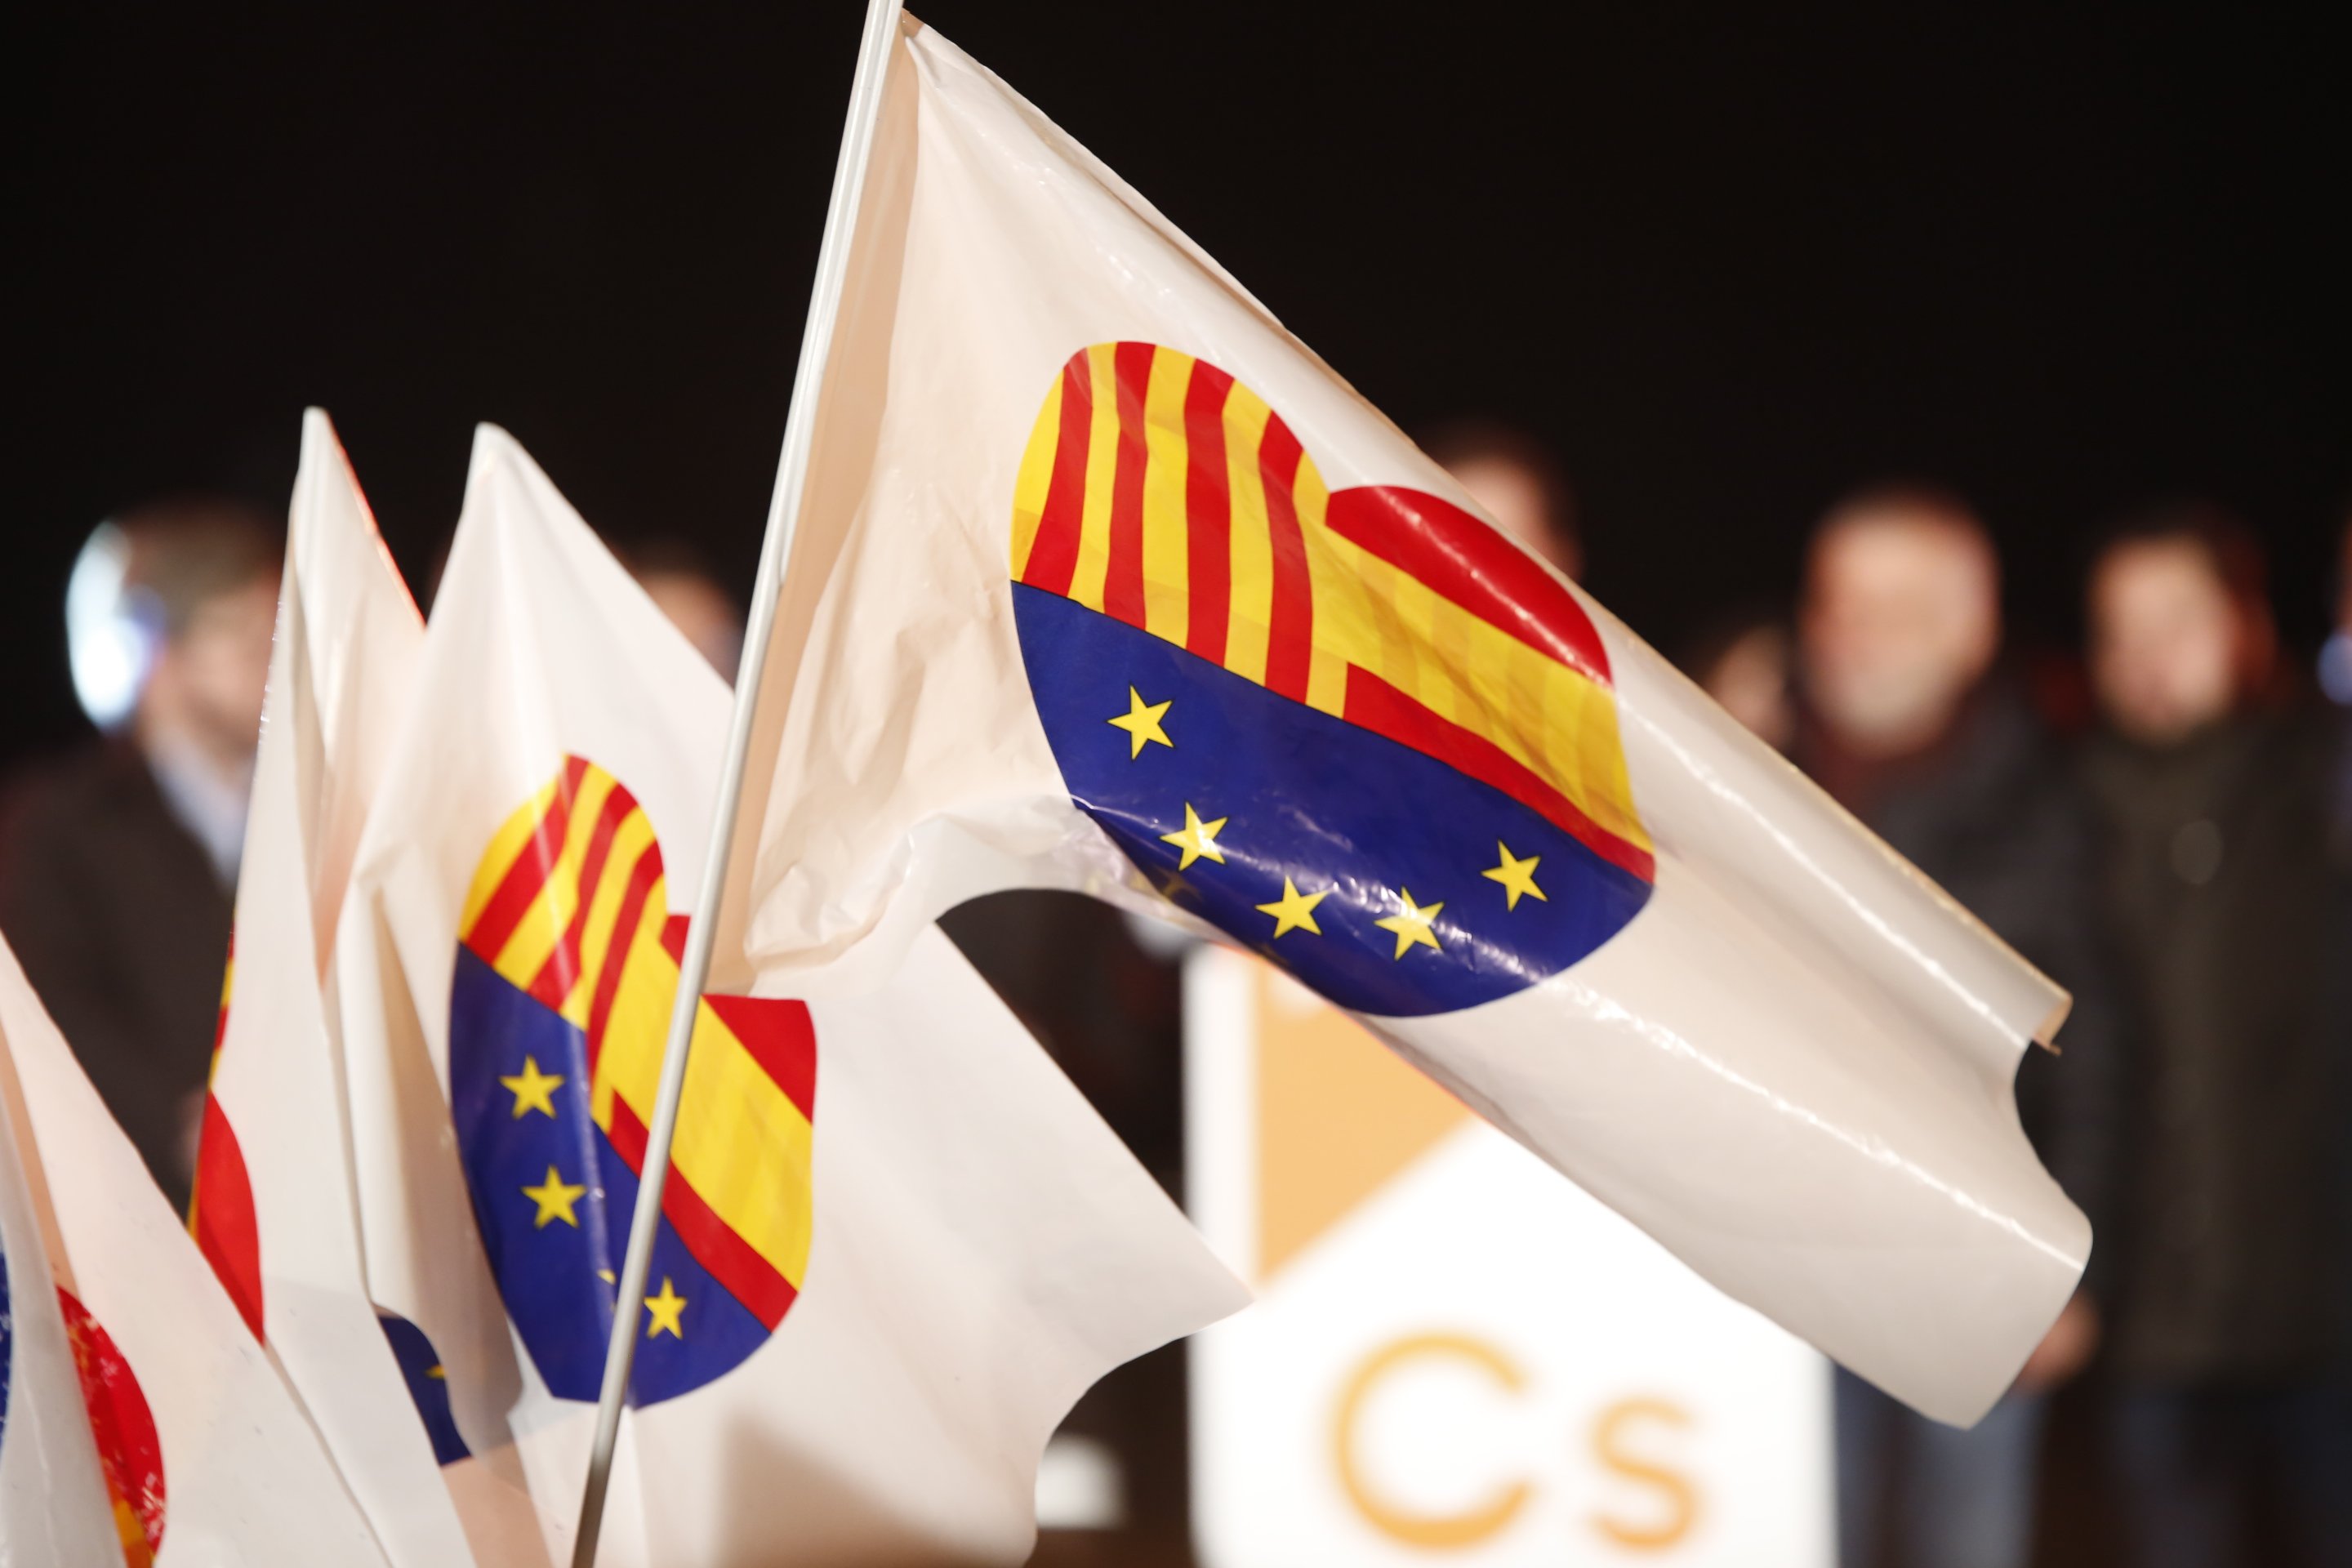 Crisis-ridden Ciudadanos purges critics in Catalonia and Andalusia